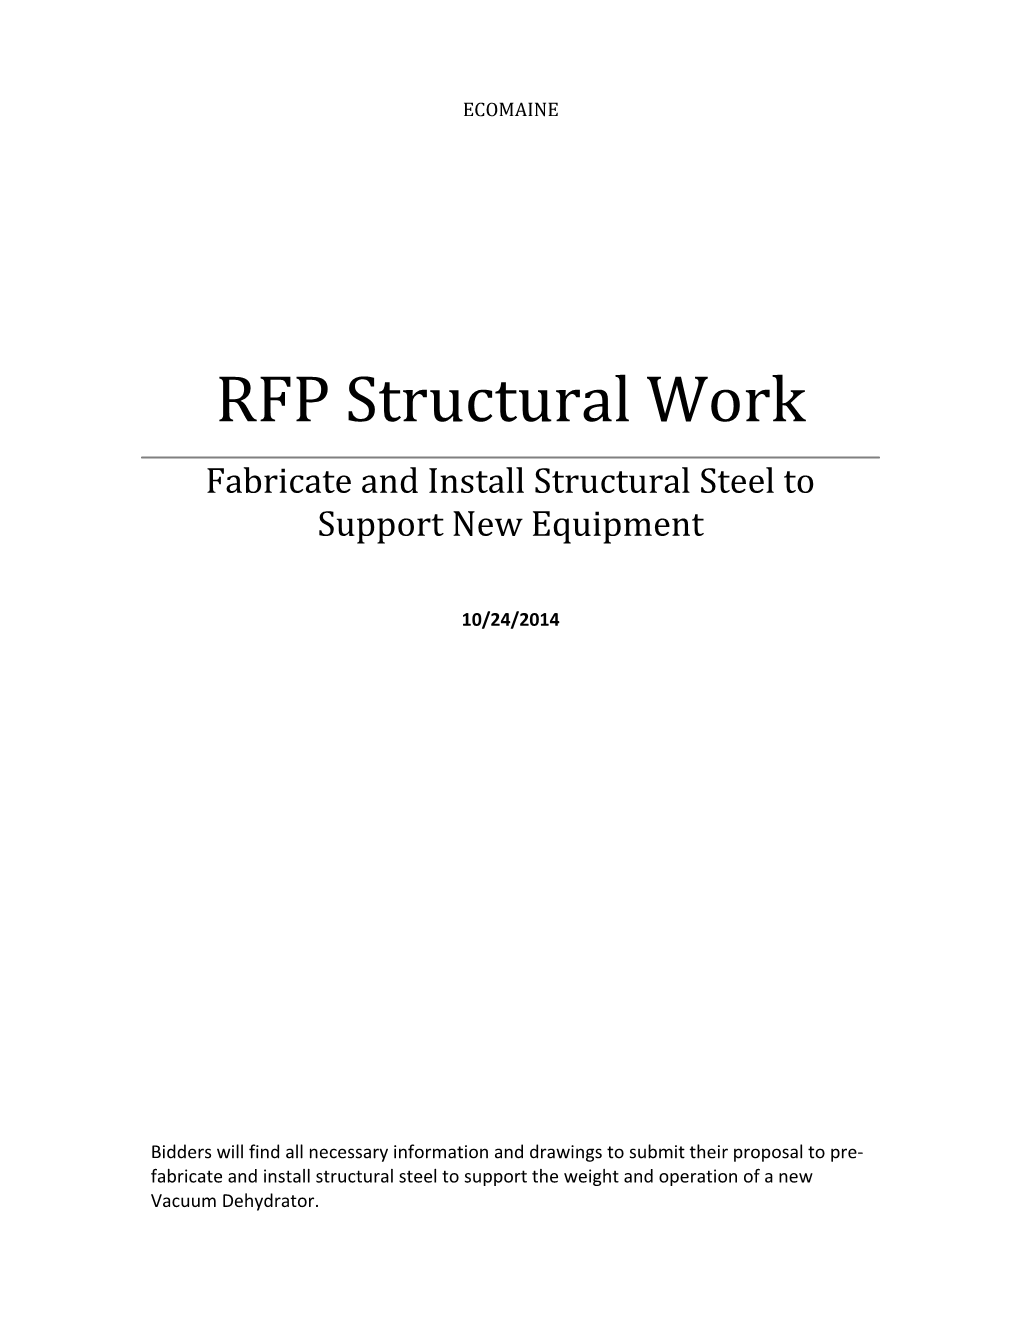 RFP Structural Work